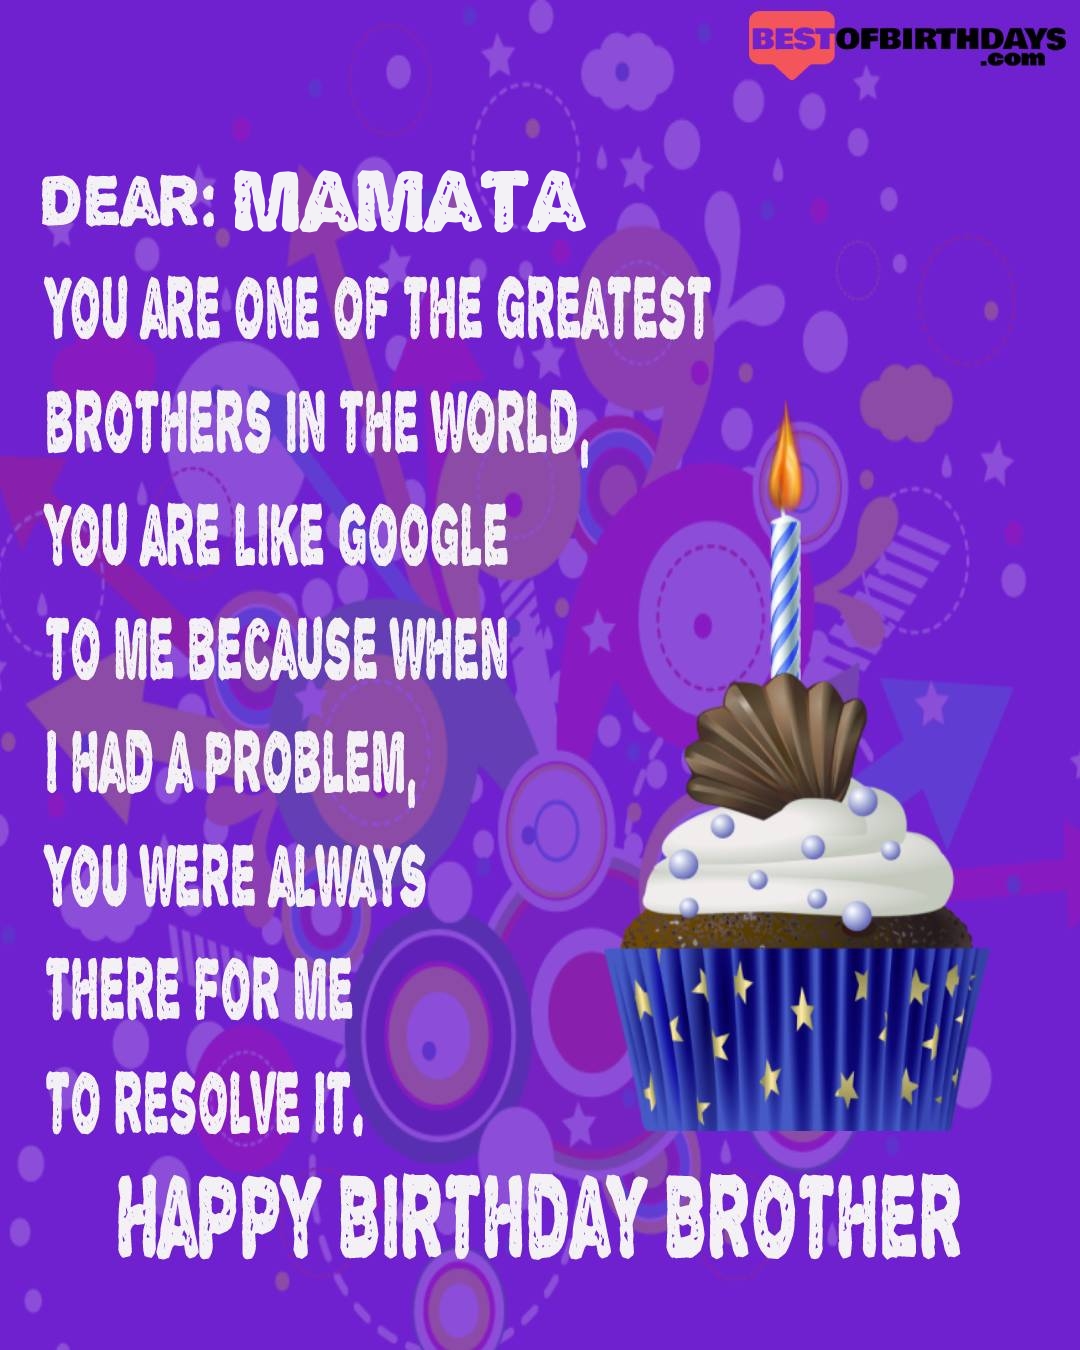 Happy birthday mamata bhai brother bro